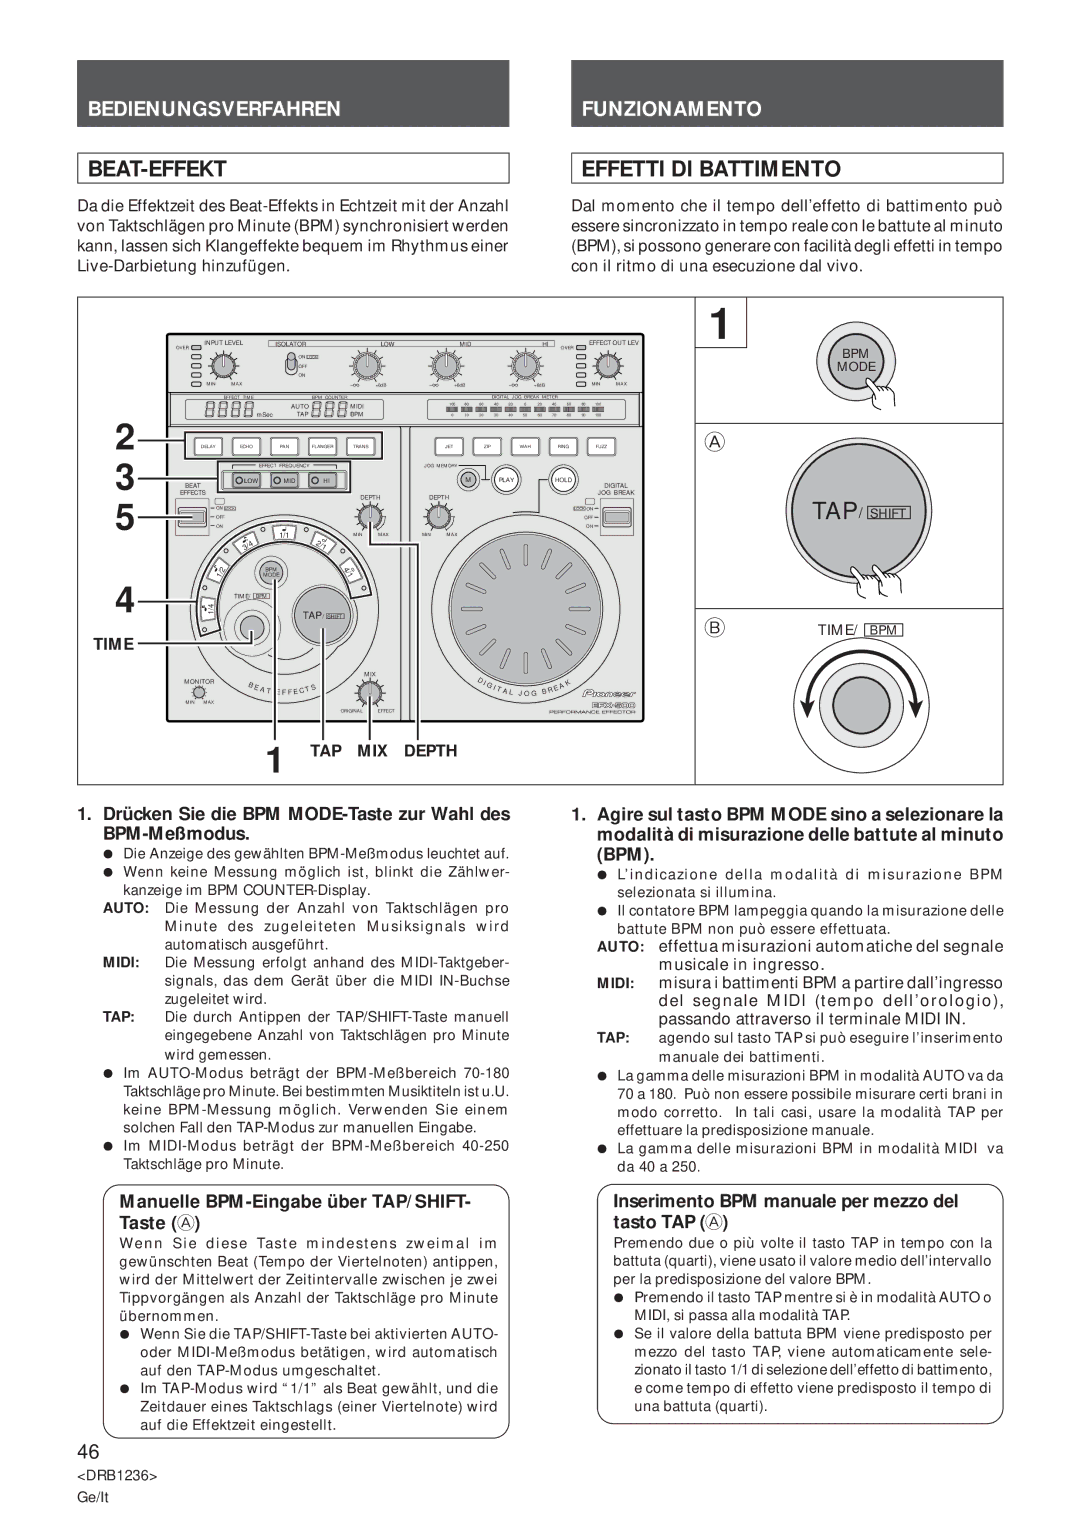 Pioneer Efx-500 operating instructions Beat-Effekt, Effetti DI Battimento, Bedienungsverfahren 